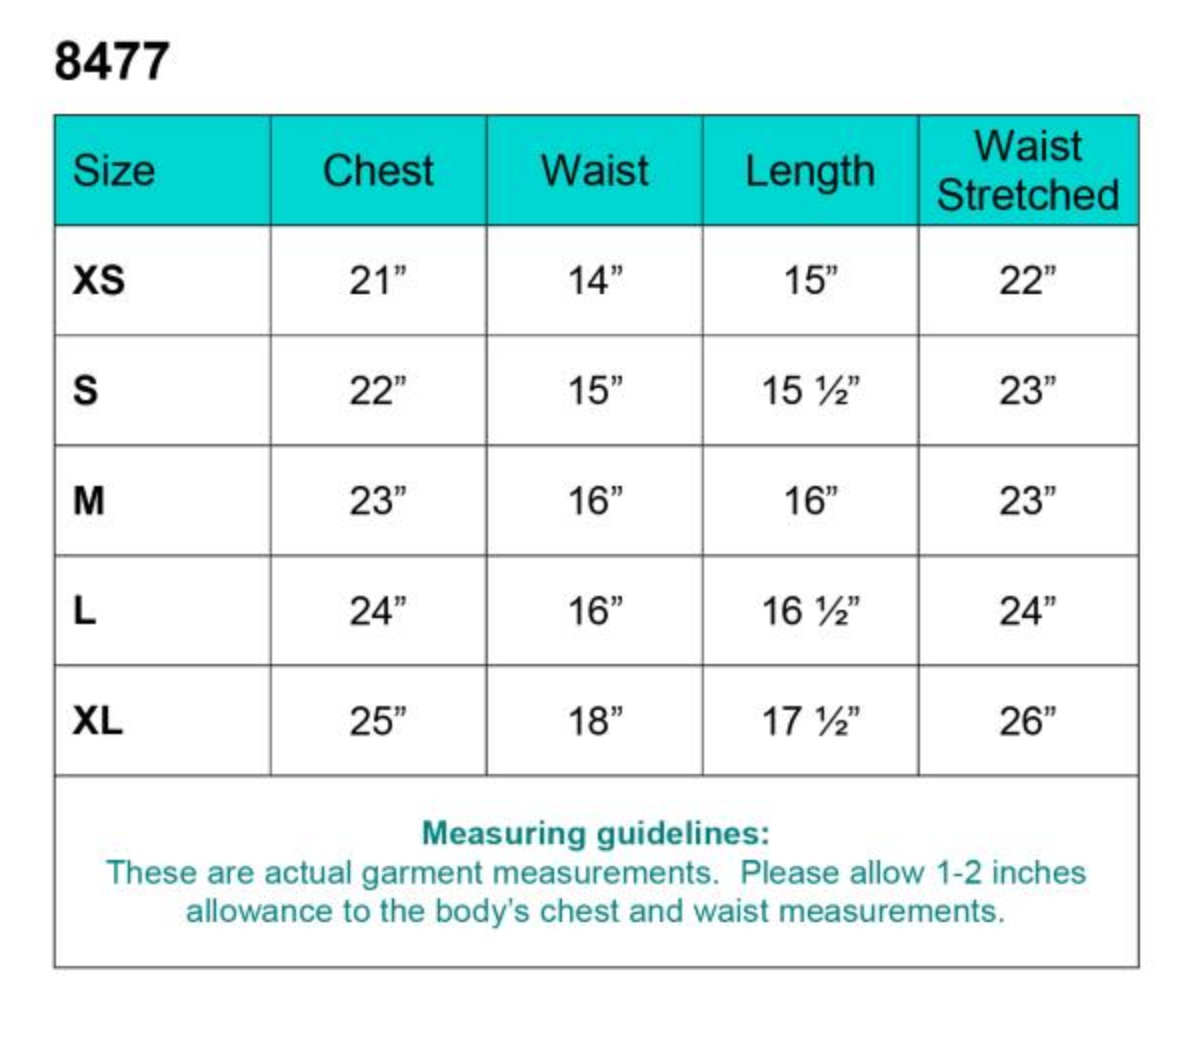 Boys Measurement Chart